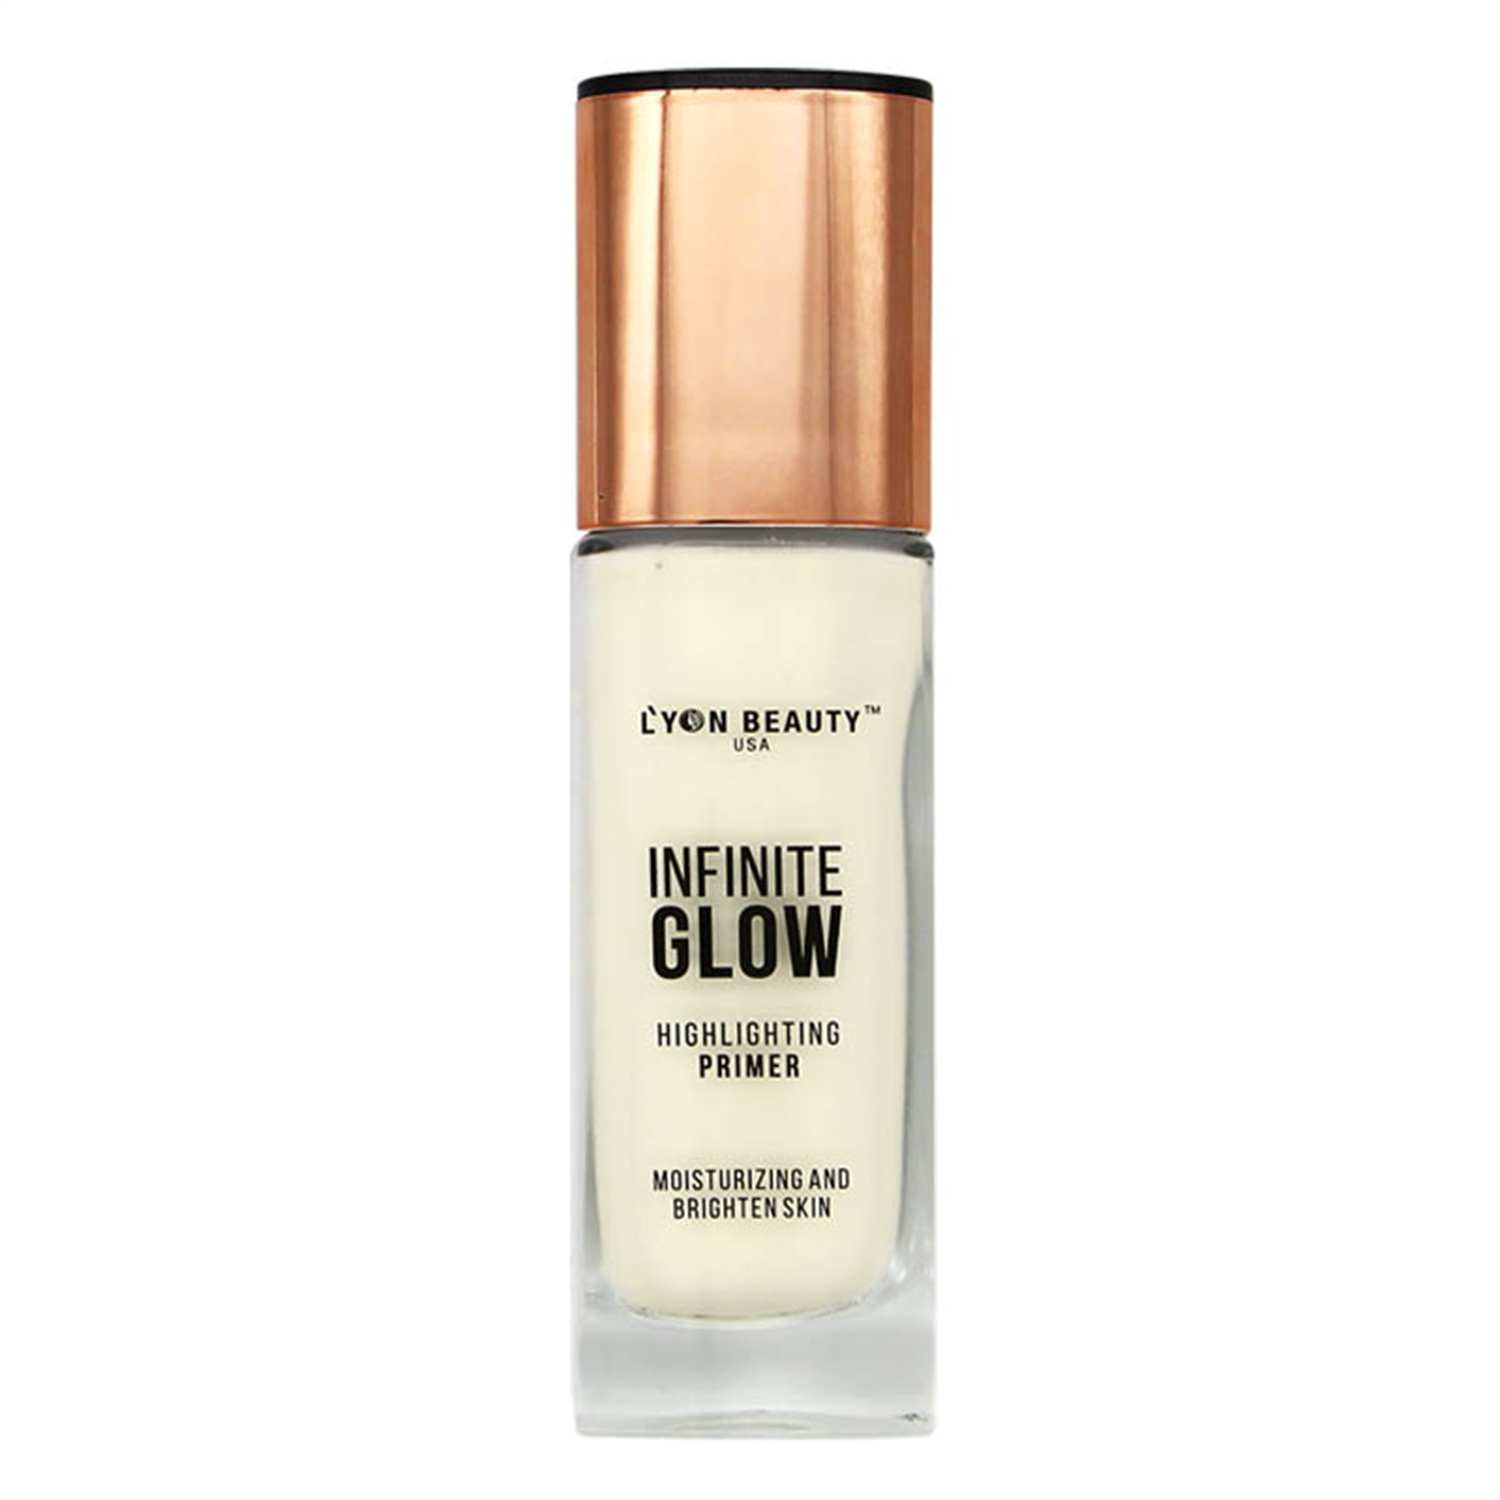 Lyon Beauty USA Infinite Glow Highlighting Primer, 30ml-02 Golden Tint